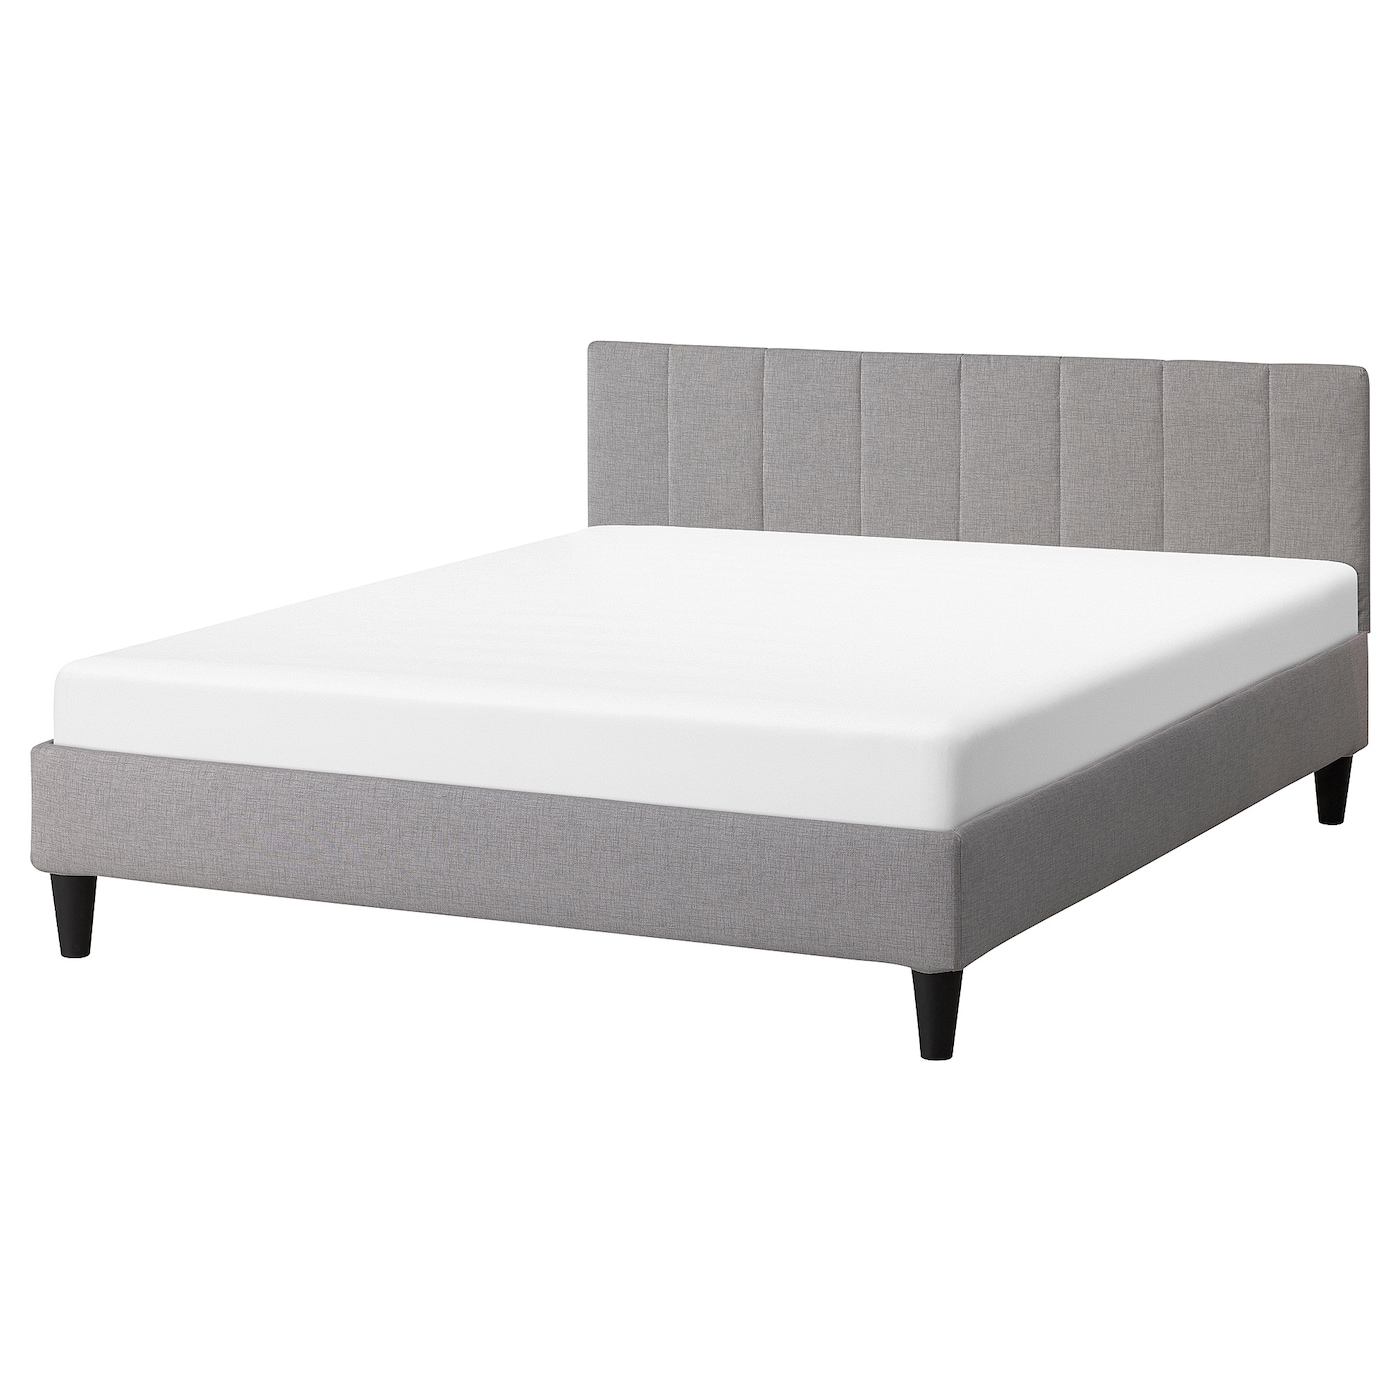 Каркас кровати с мягкой обивкой - IKEA FALUDDEN, 200х140 см, серый, ФАЛЮДДЕН ИКЕА